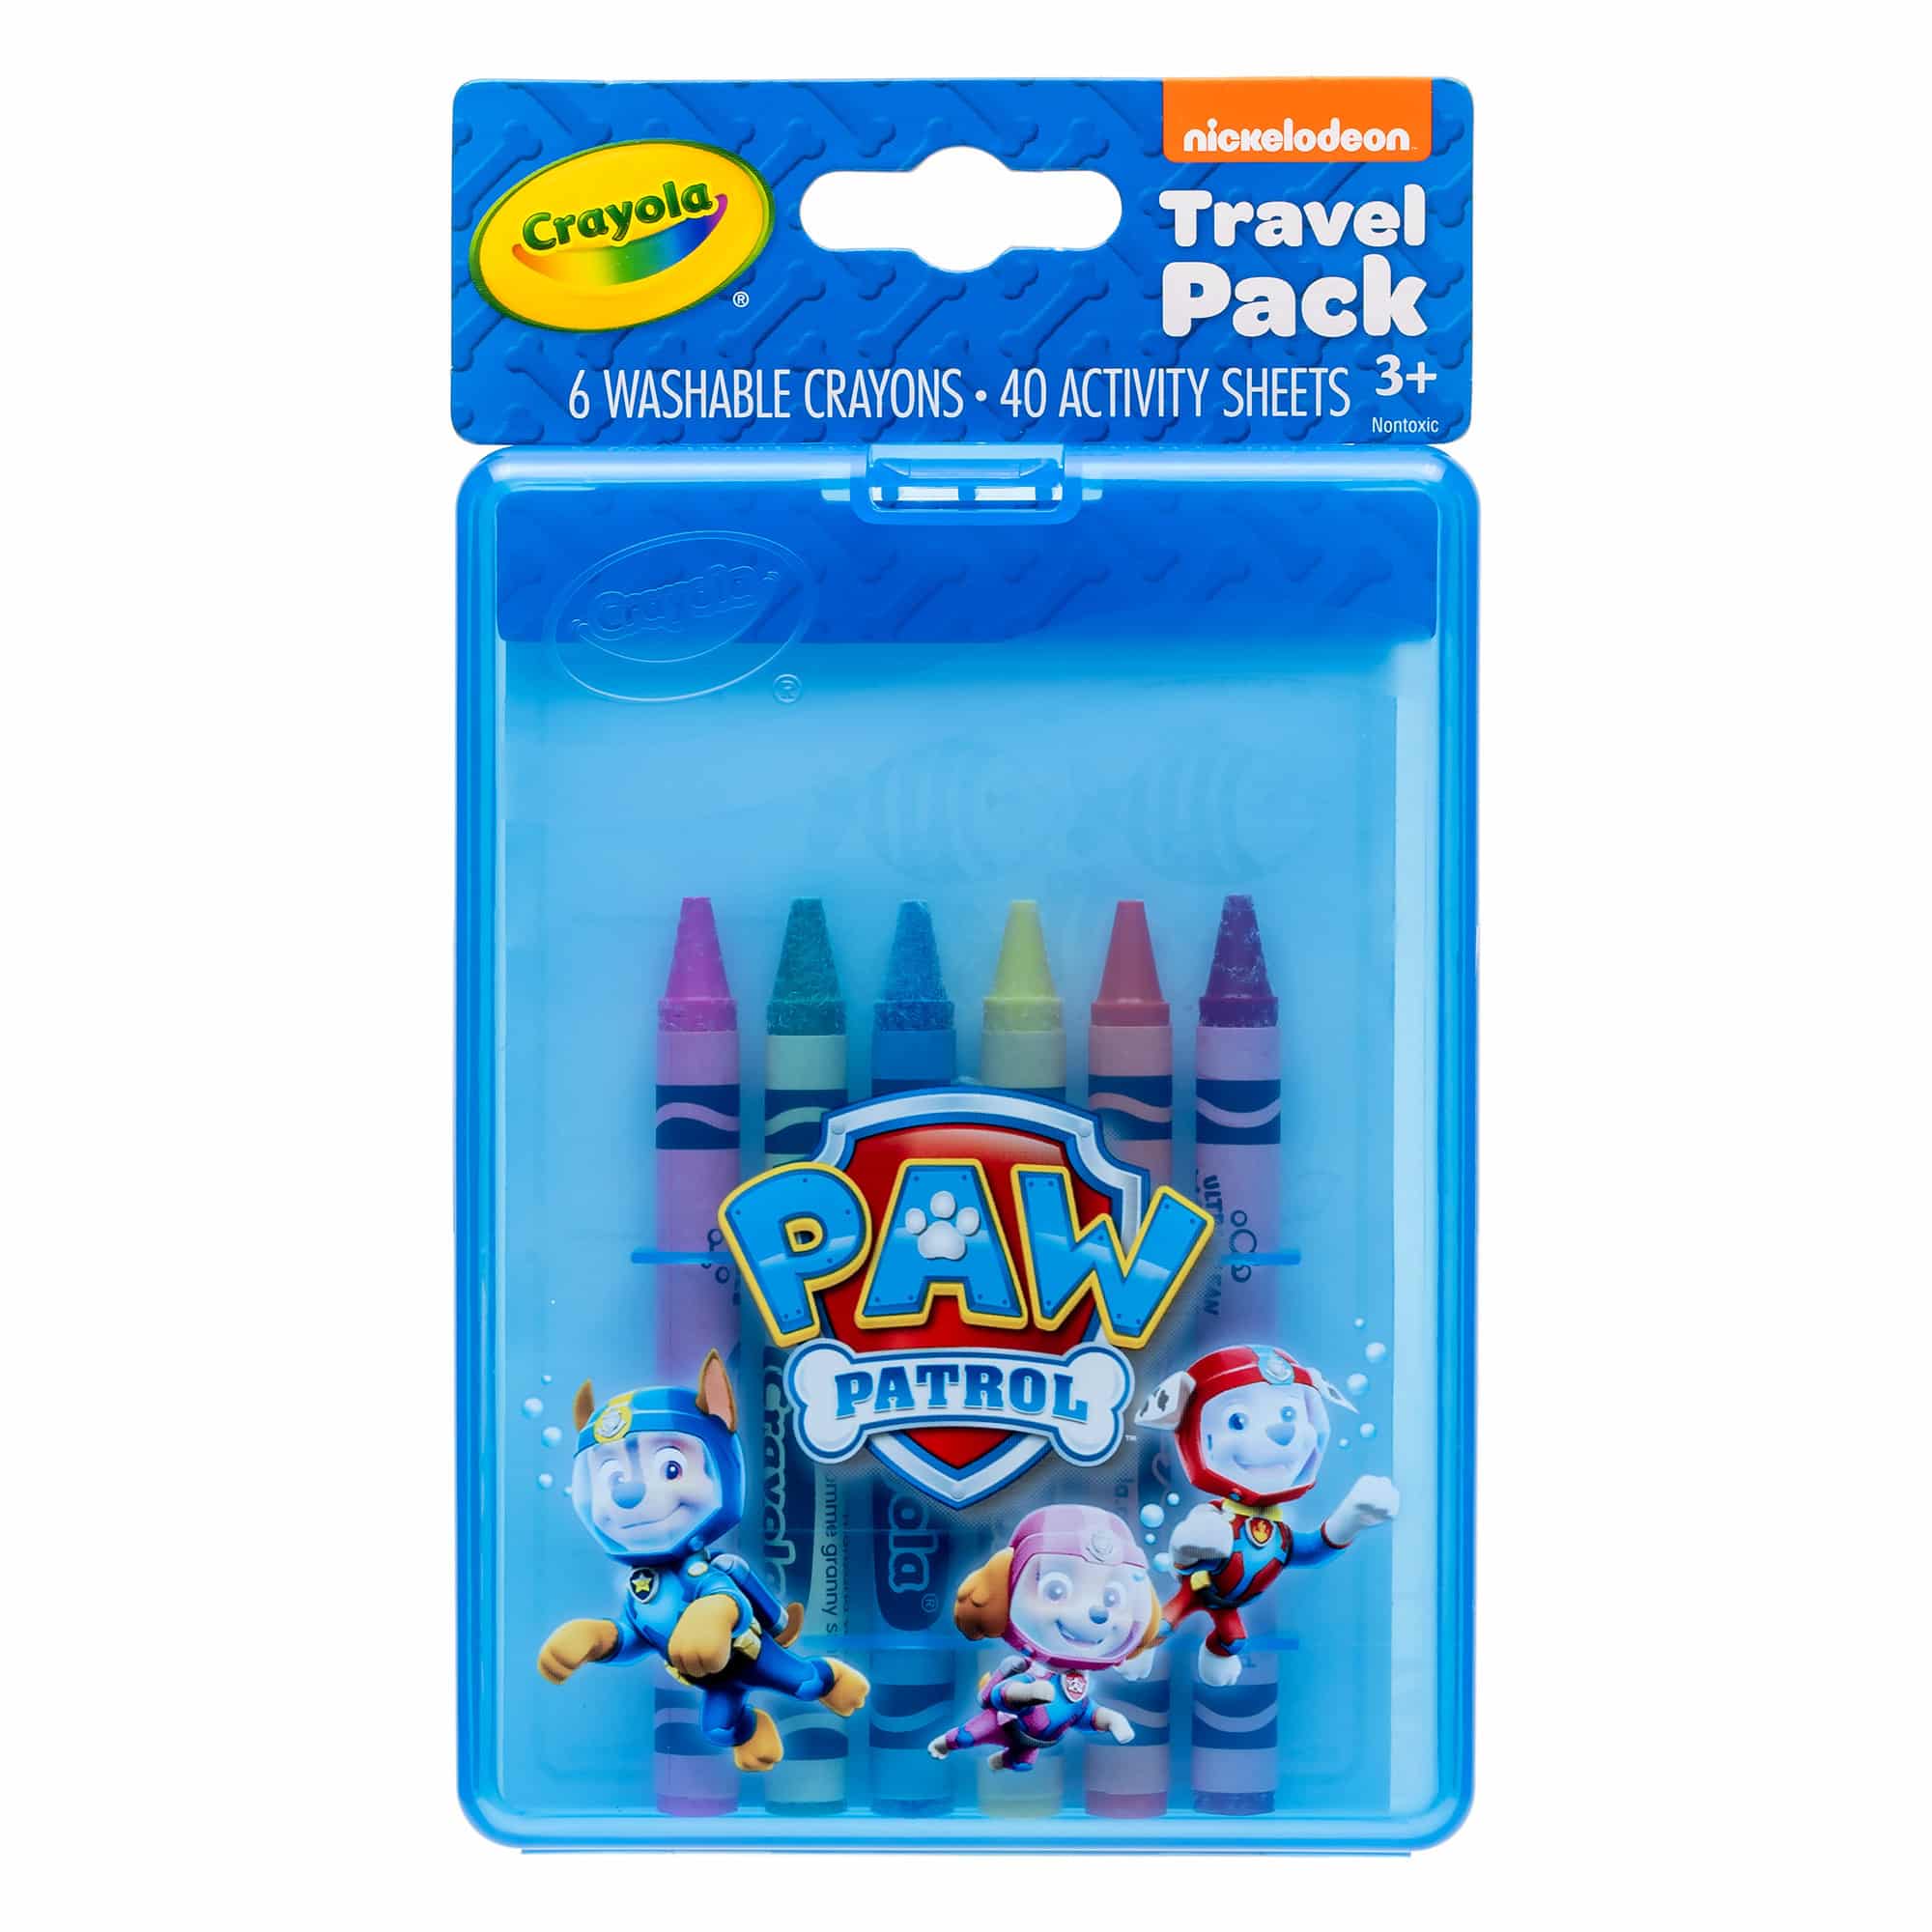 Crayola - Paw Patrol Travel Pack